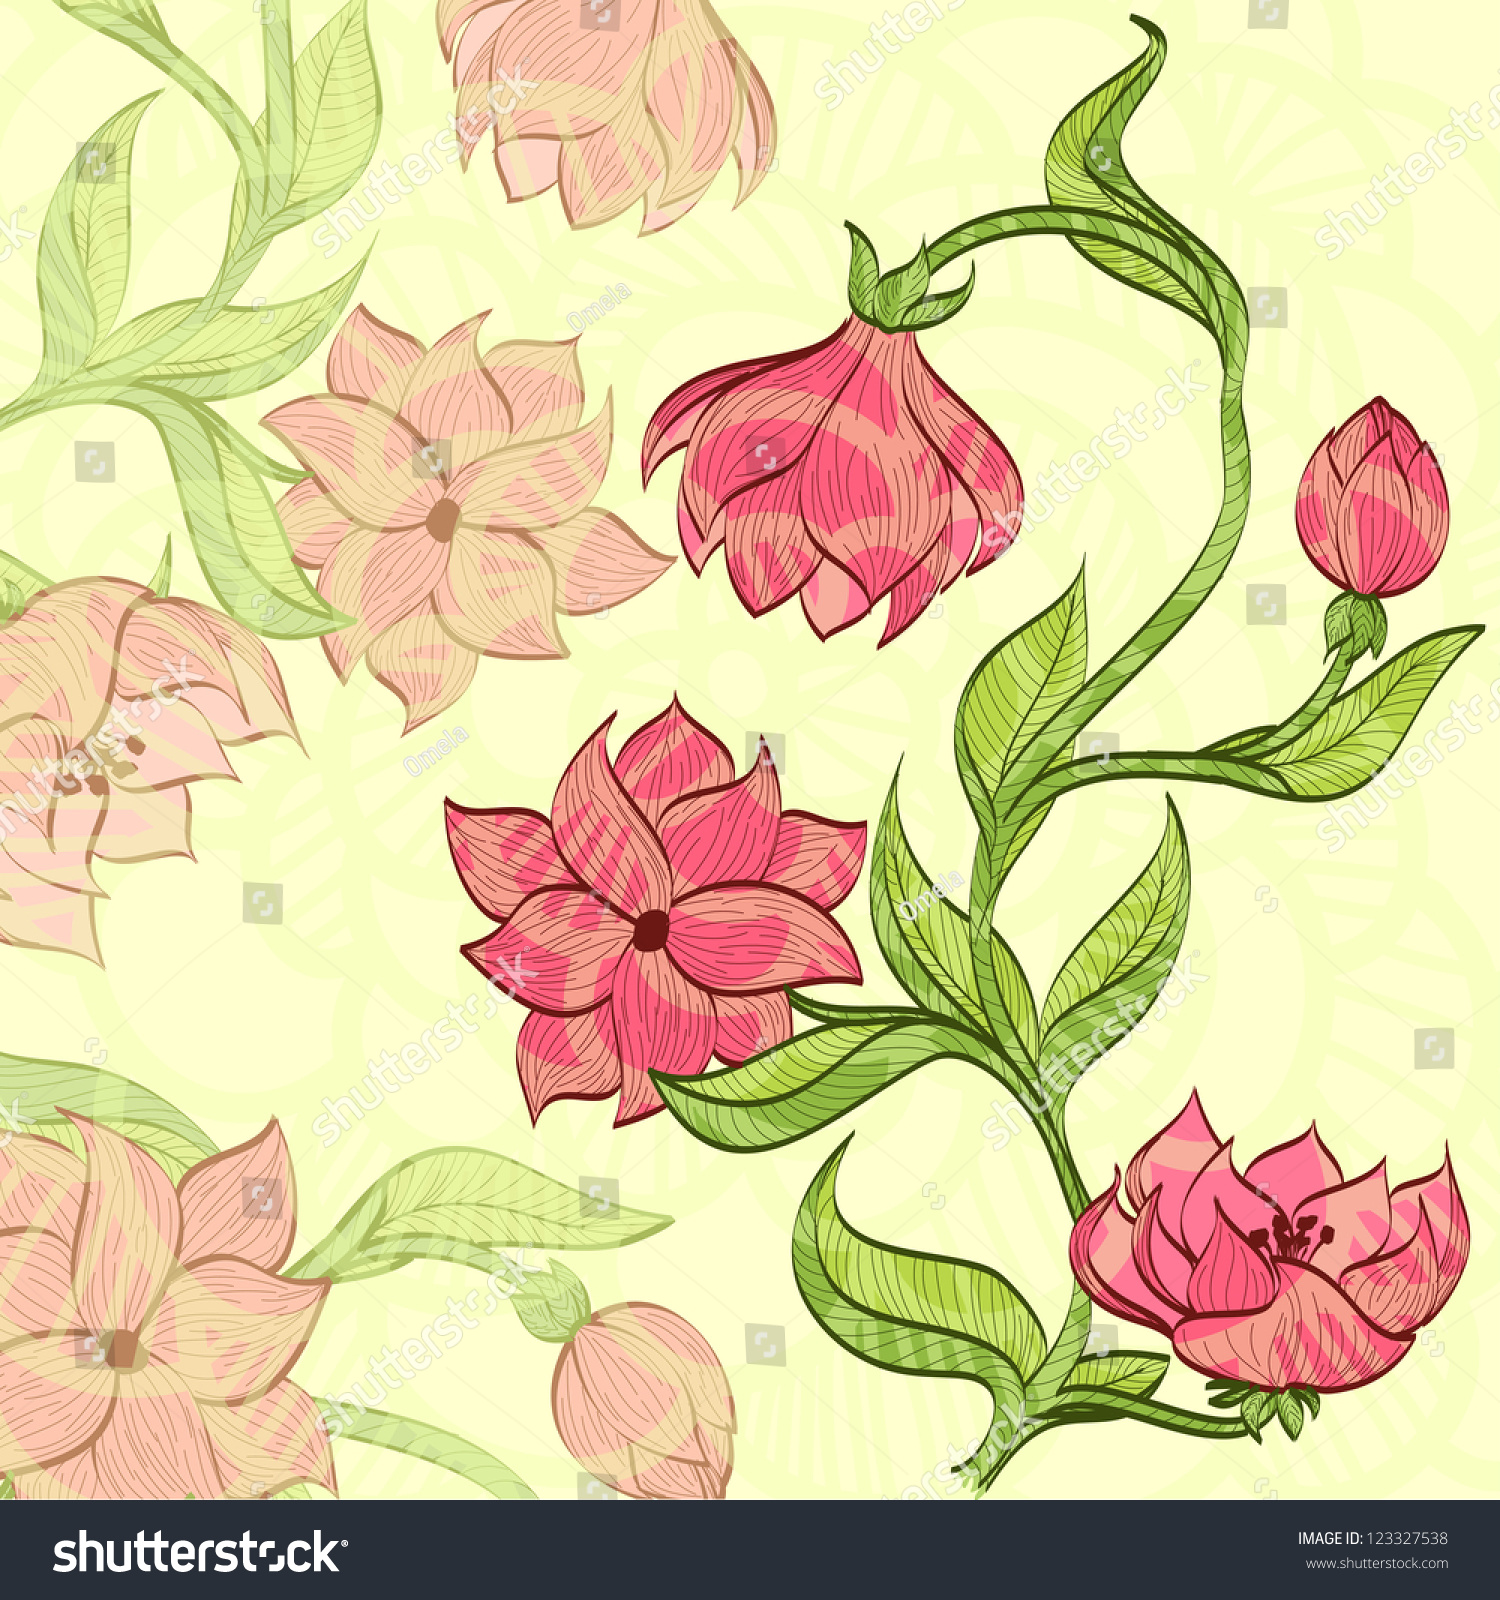 Vector Background With Handdrawn Flower - 123327538 : Shutterstock